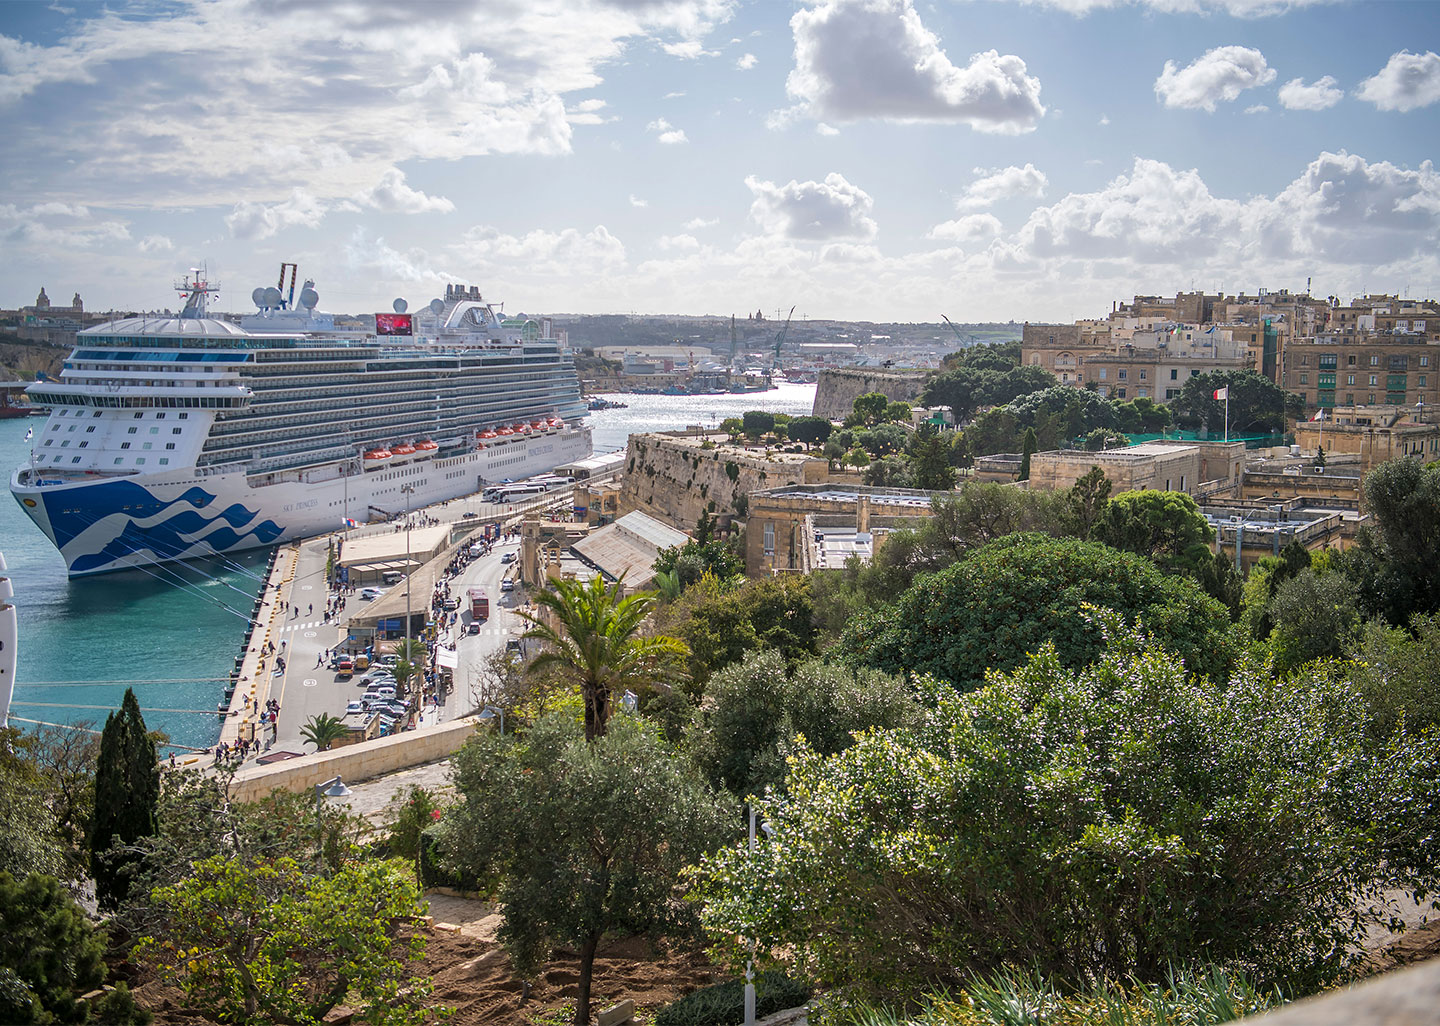 Sky Princess, Princess Cruises’ latest newbuild visits Valletta